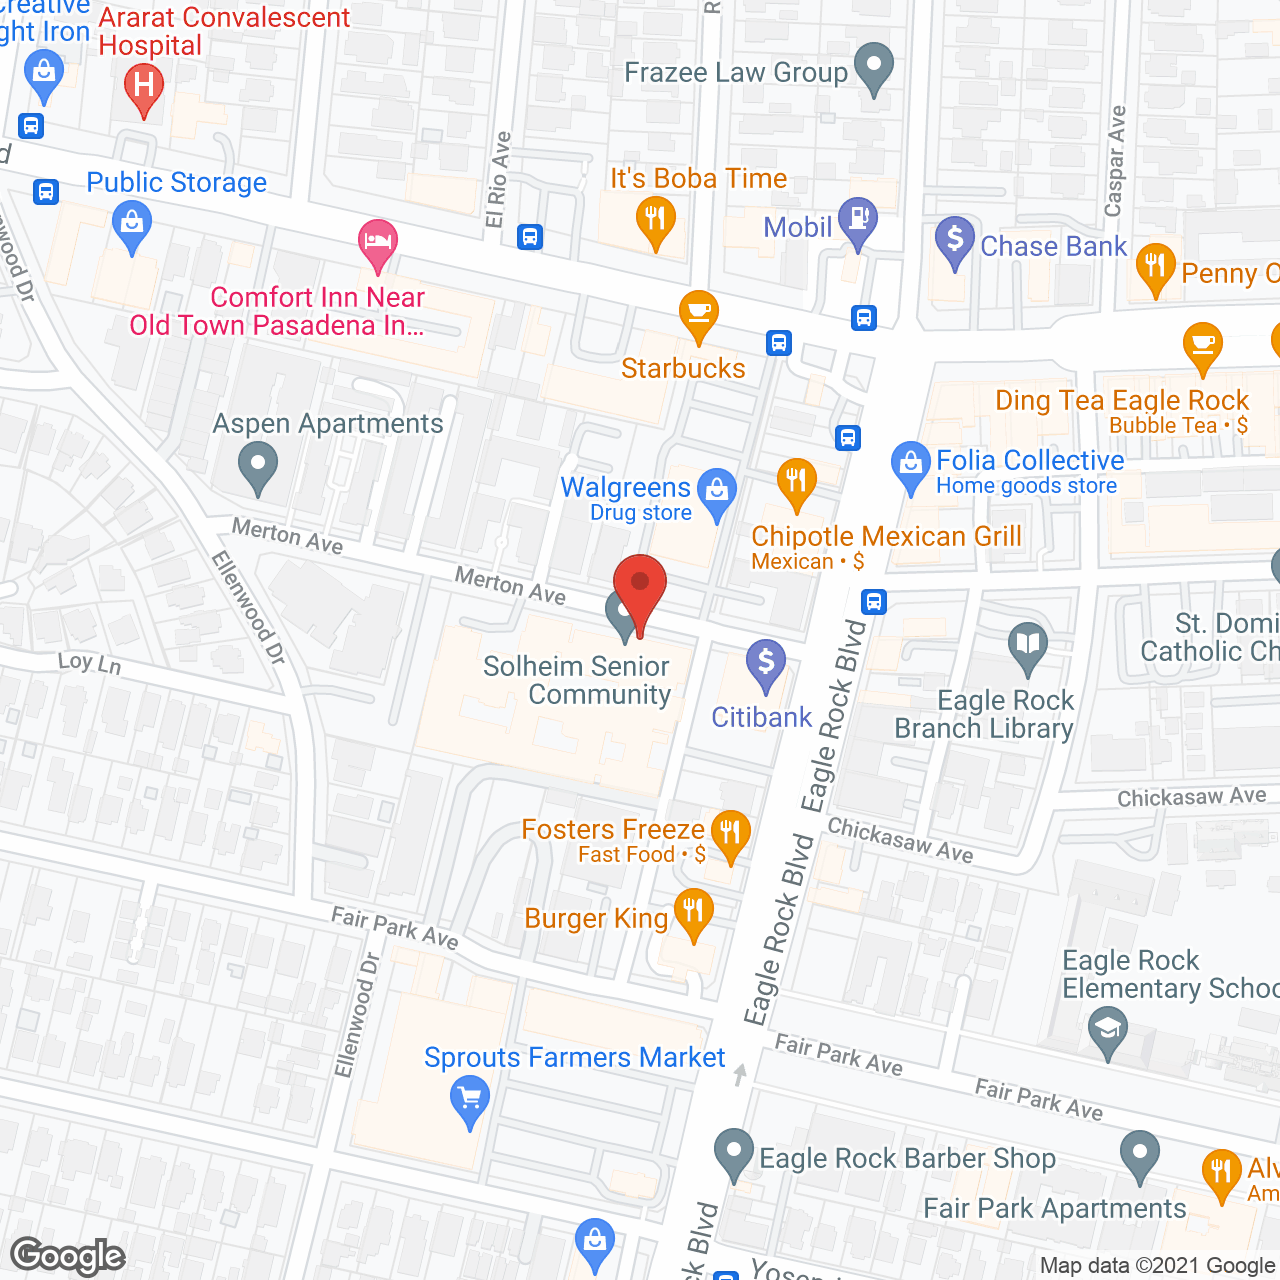 Solheim Senior Community in google map